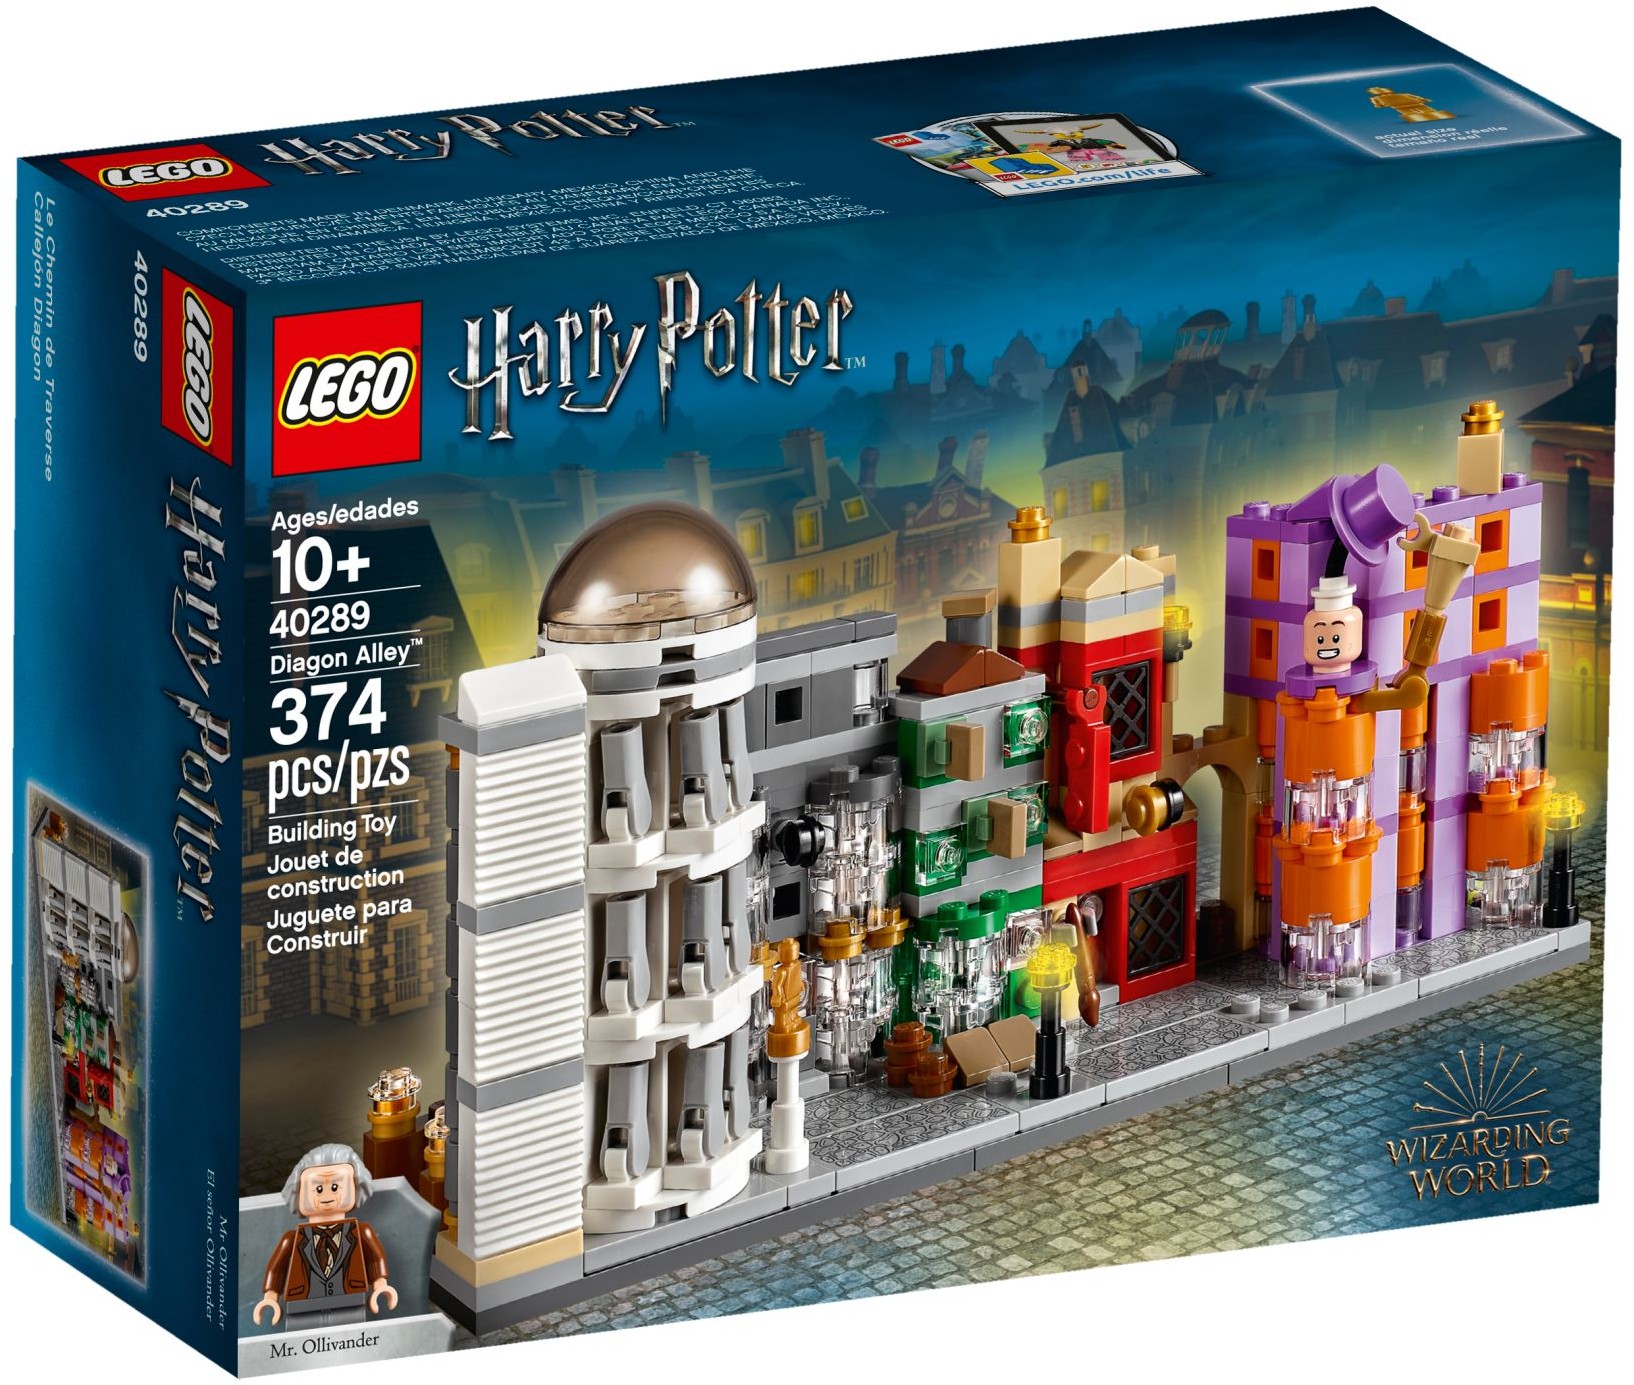 Lego 40289 Alley - Harry Potter set sale best price